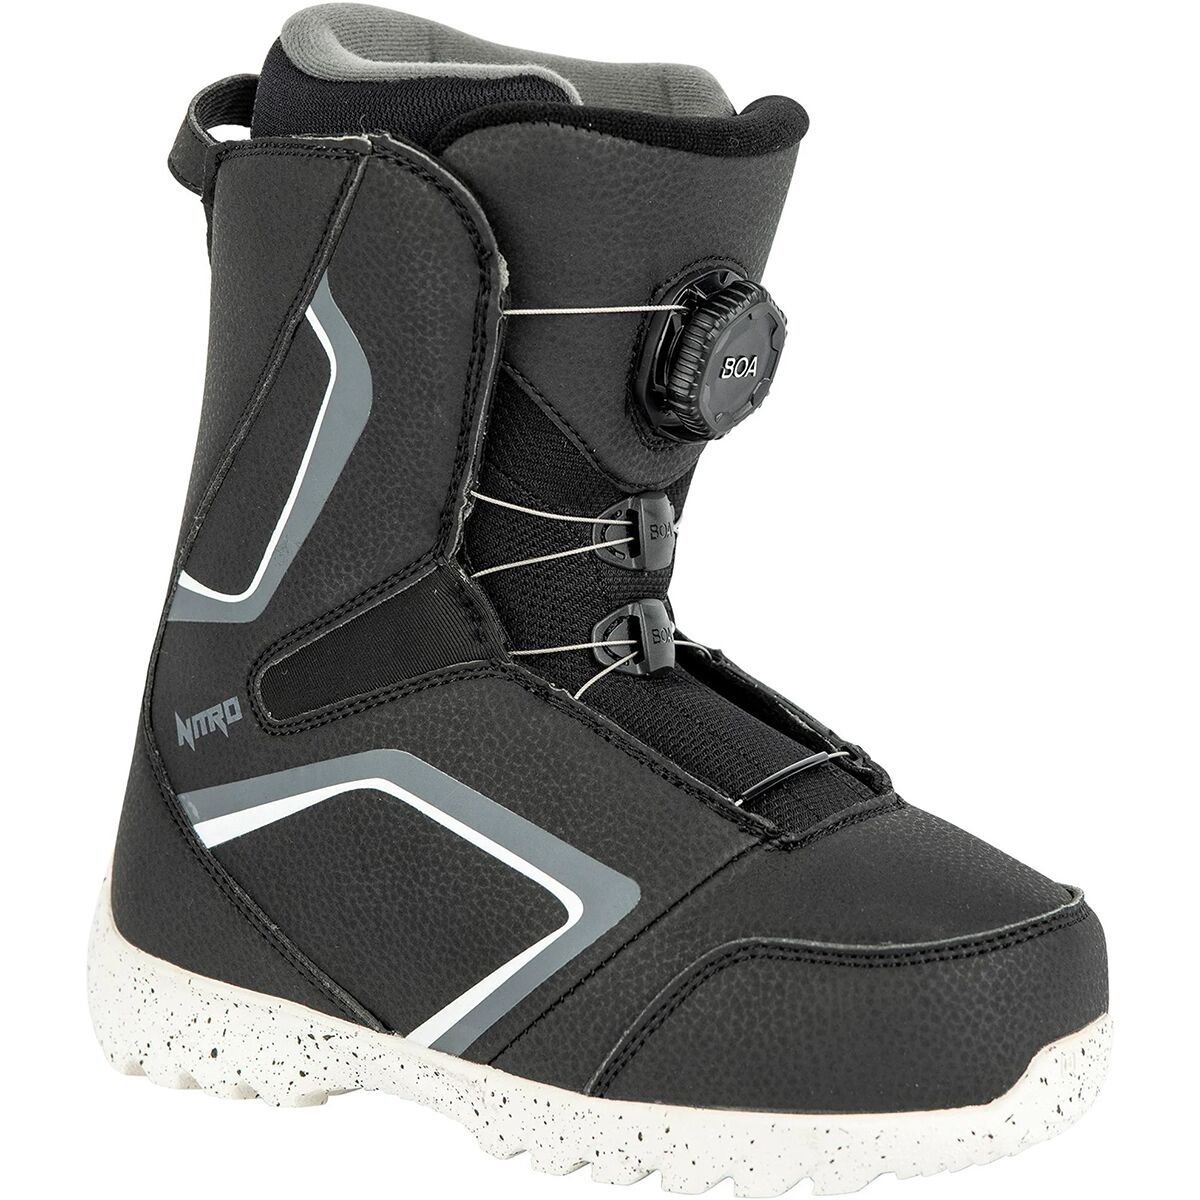 Nitro Droid BOA Snowboard Boot - 2022 - Kids' Black/White/Charcoal